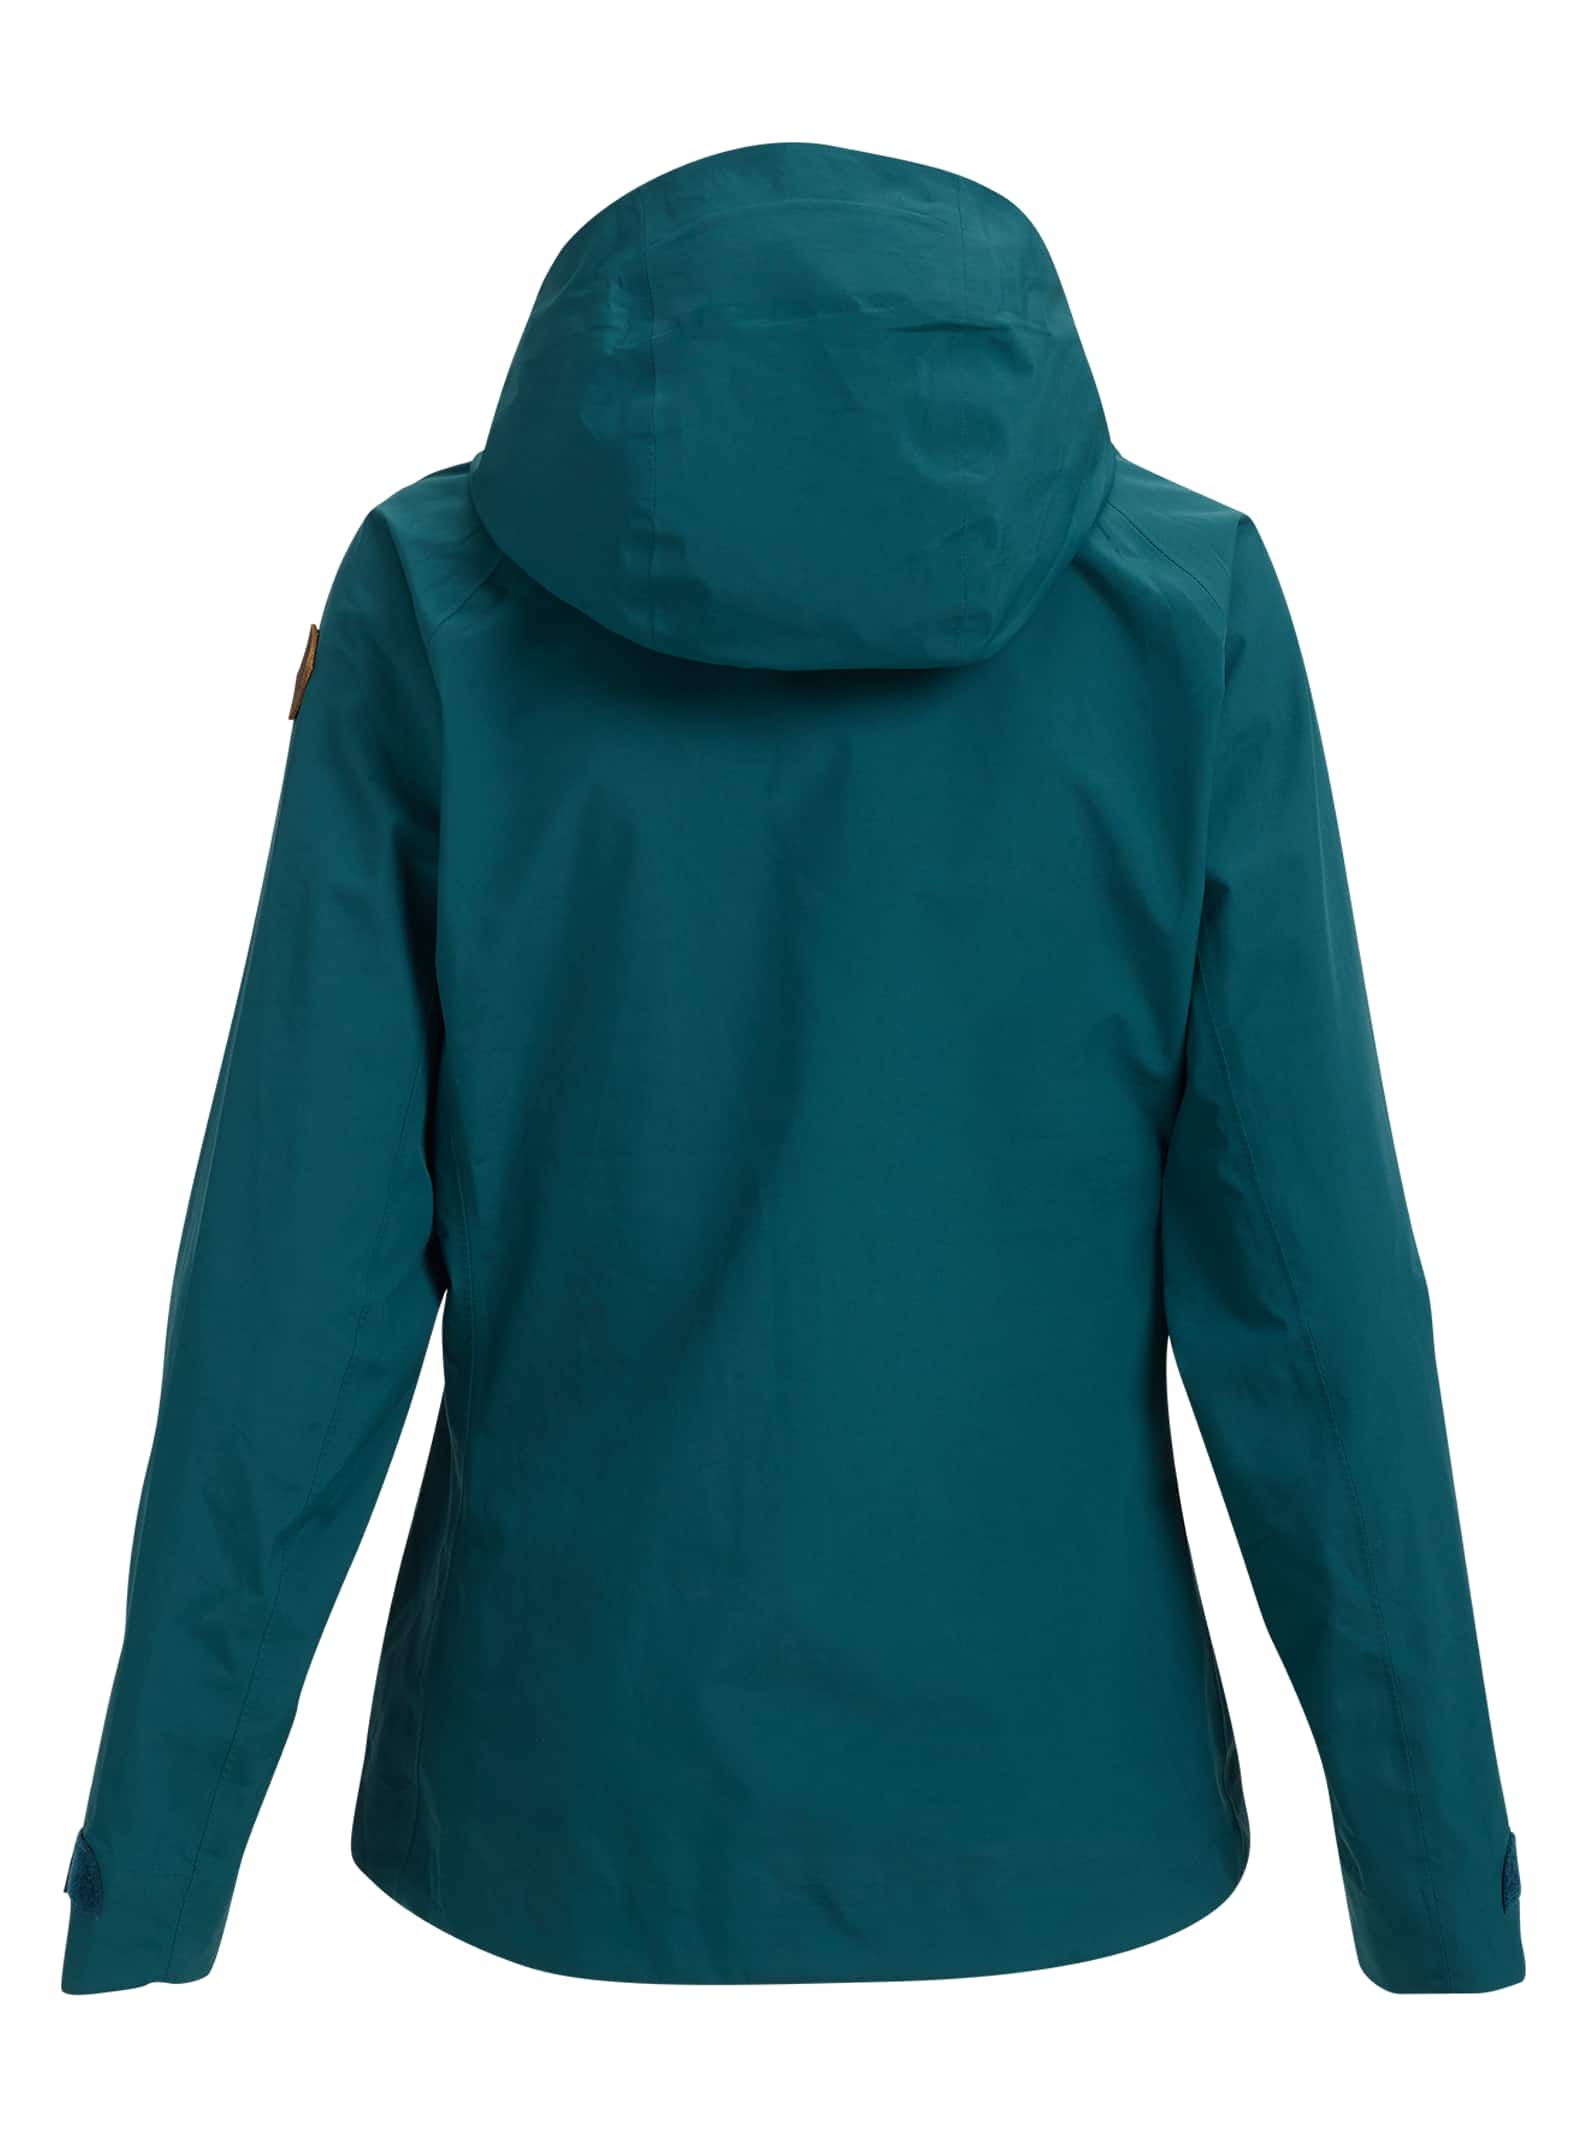 Women's Burton GORE-TEX Packrite Rain Jacket | Burton.com Fall 2019 US